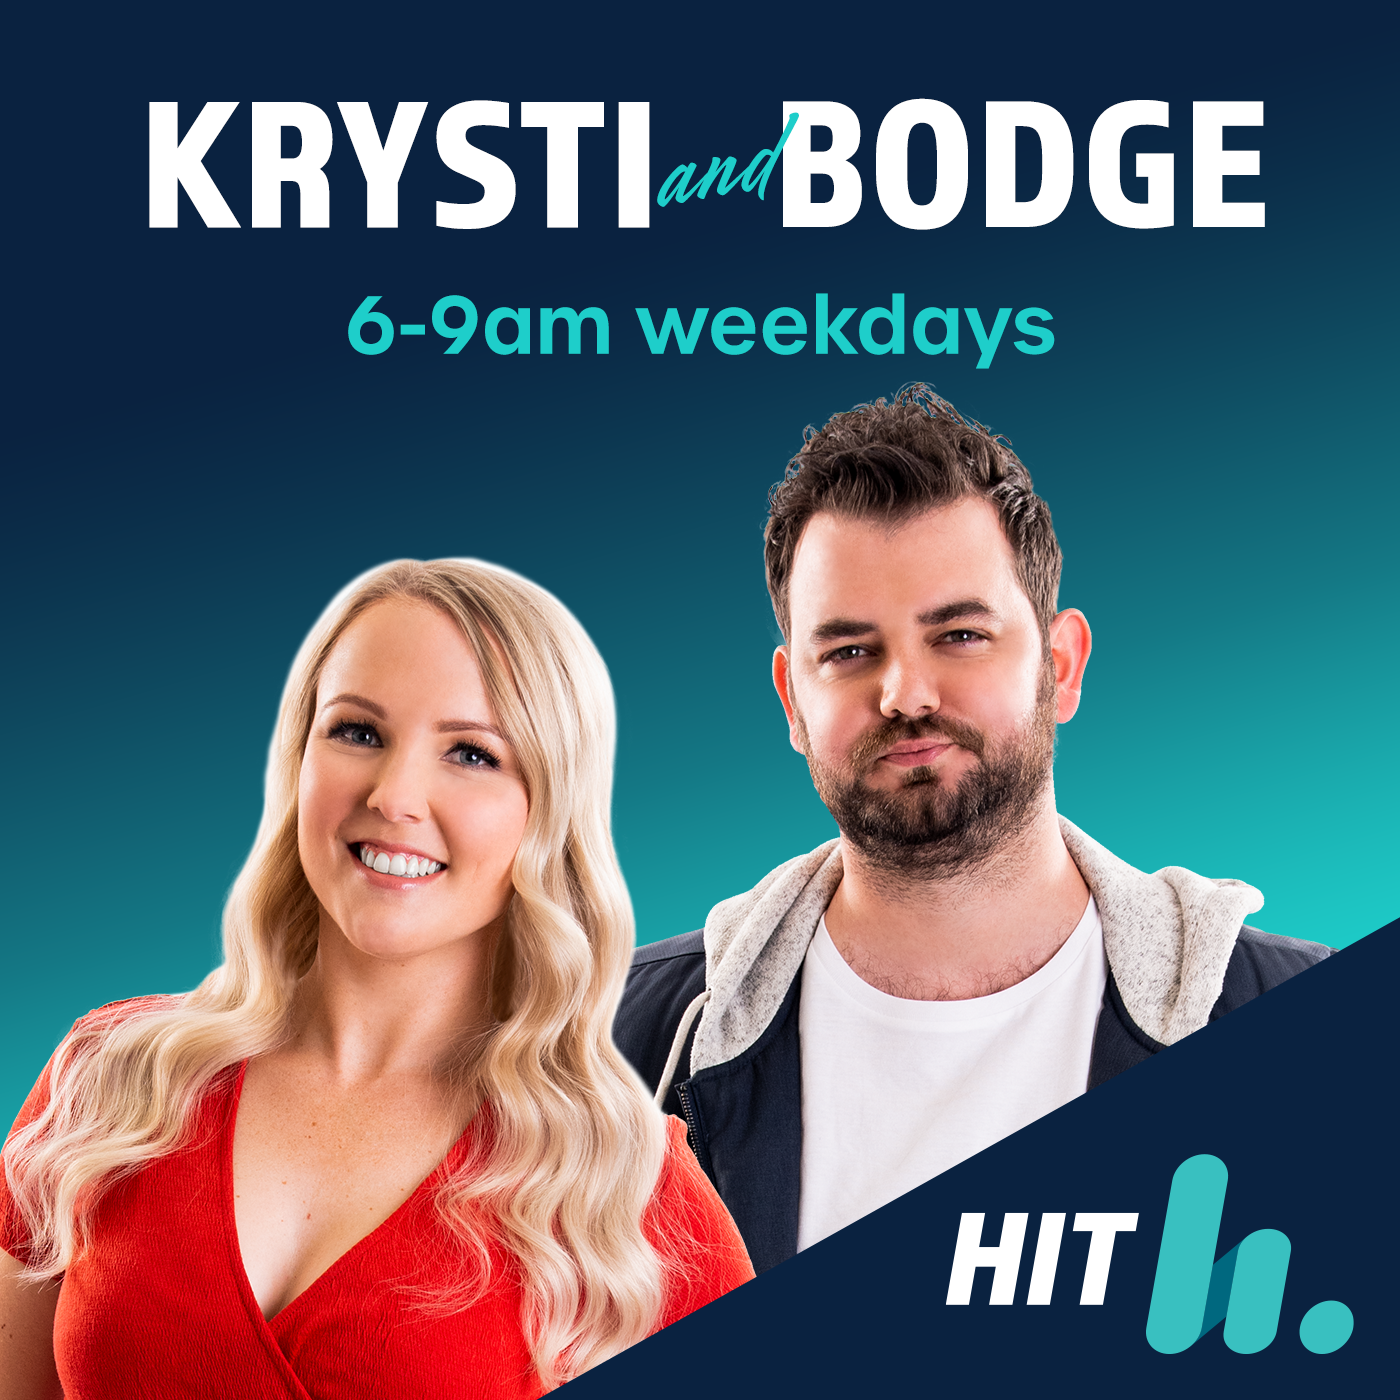 Krysti & Bodge - Accident In Studio, Sleep Expert, First Attempt At Running In Months,